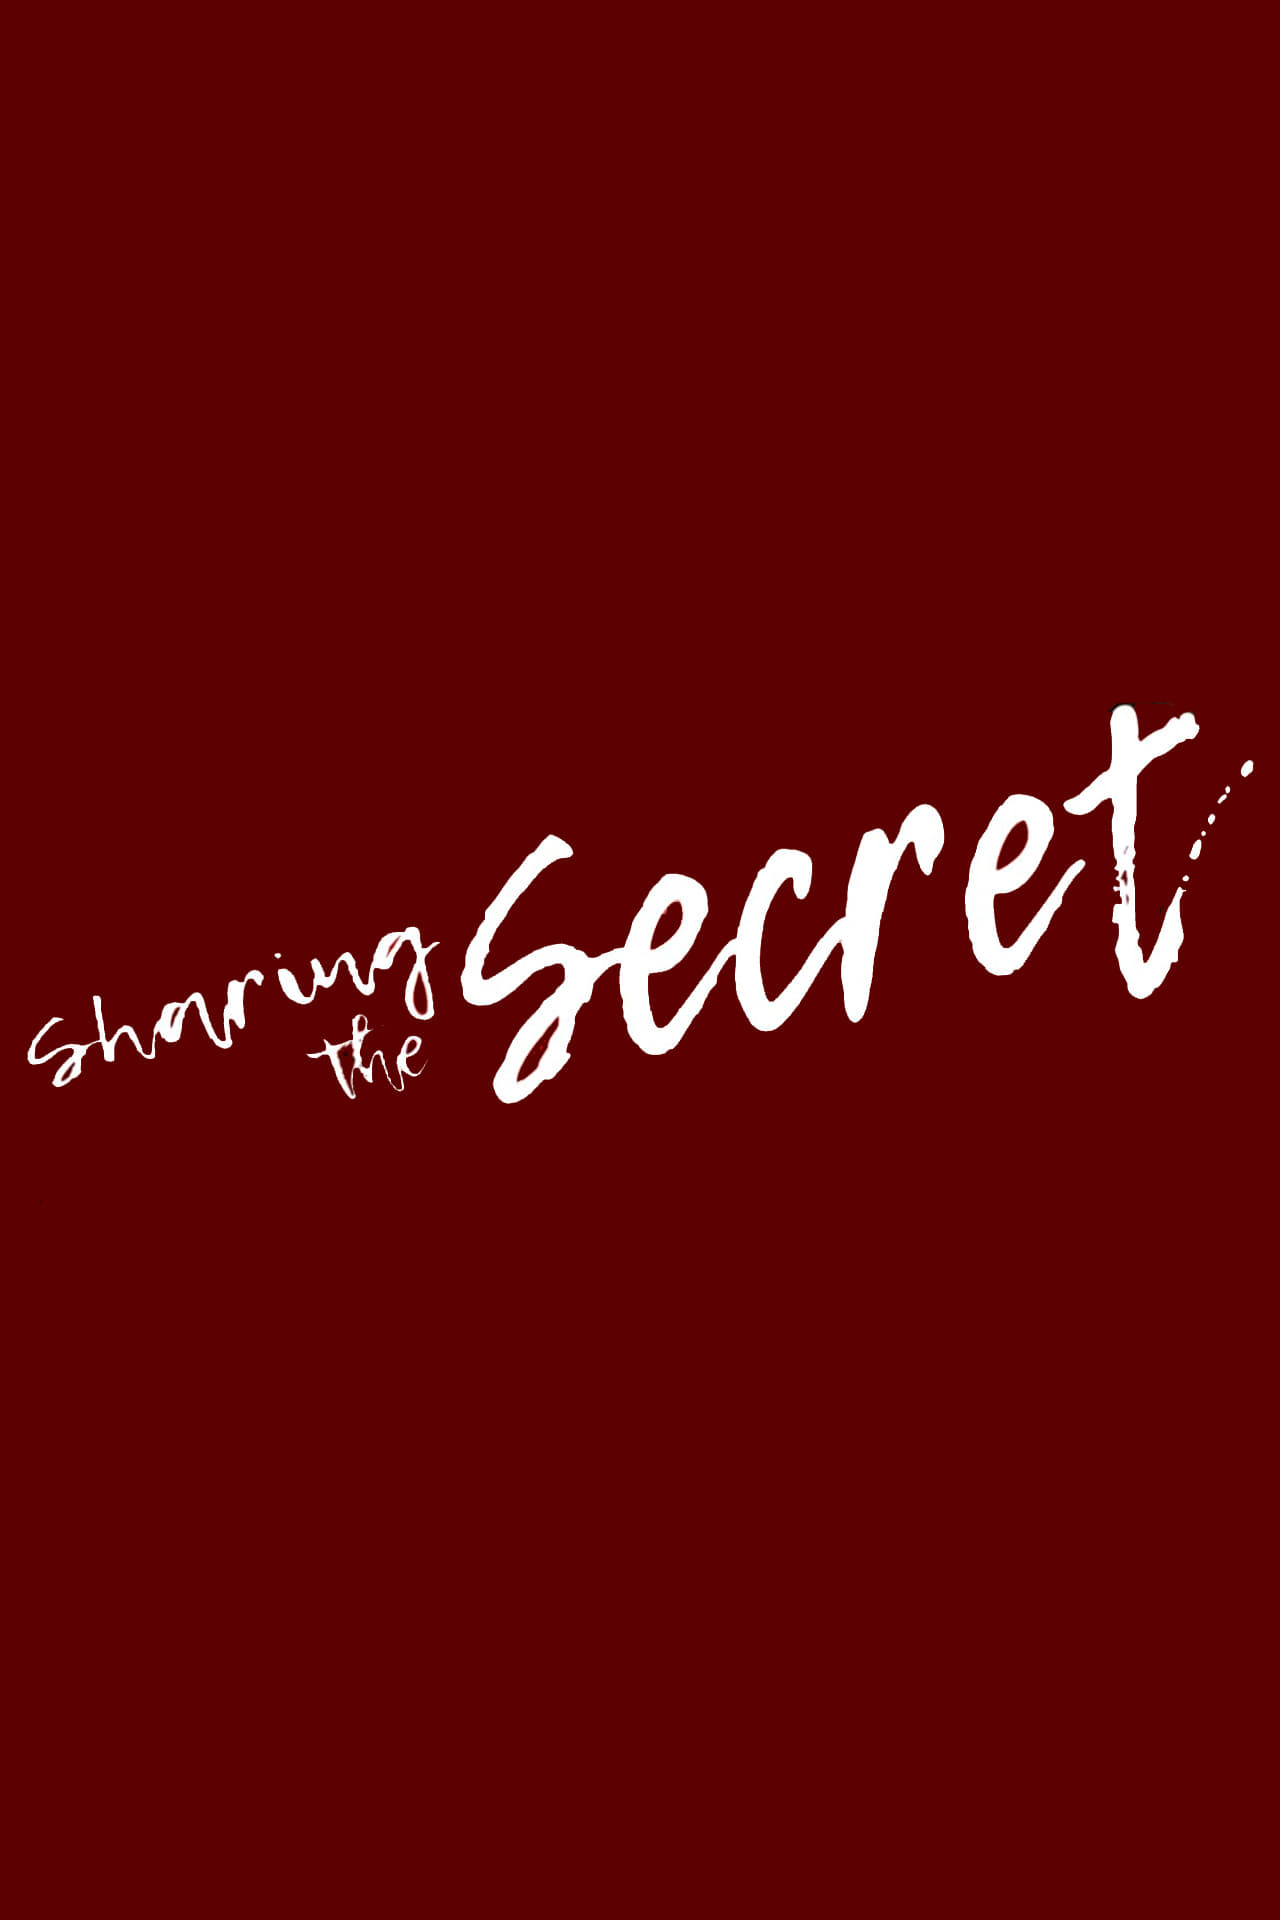 Sharing the Secret